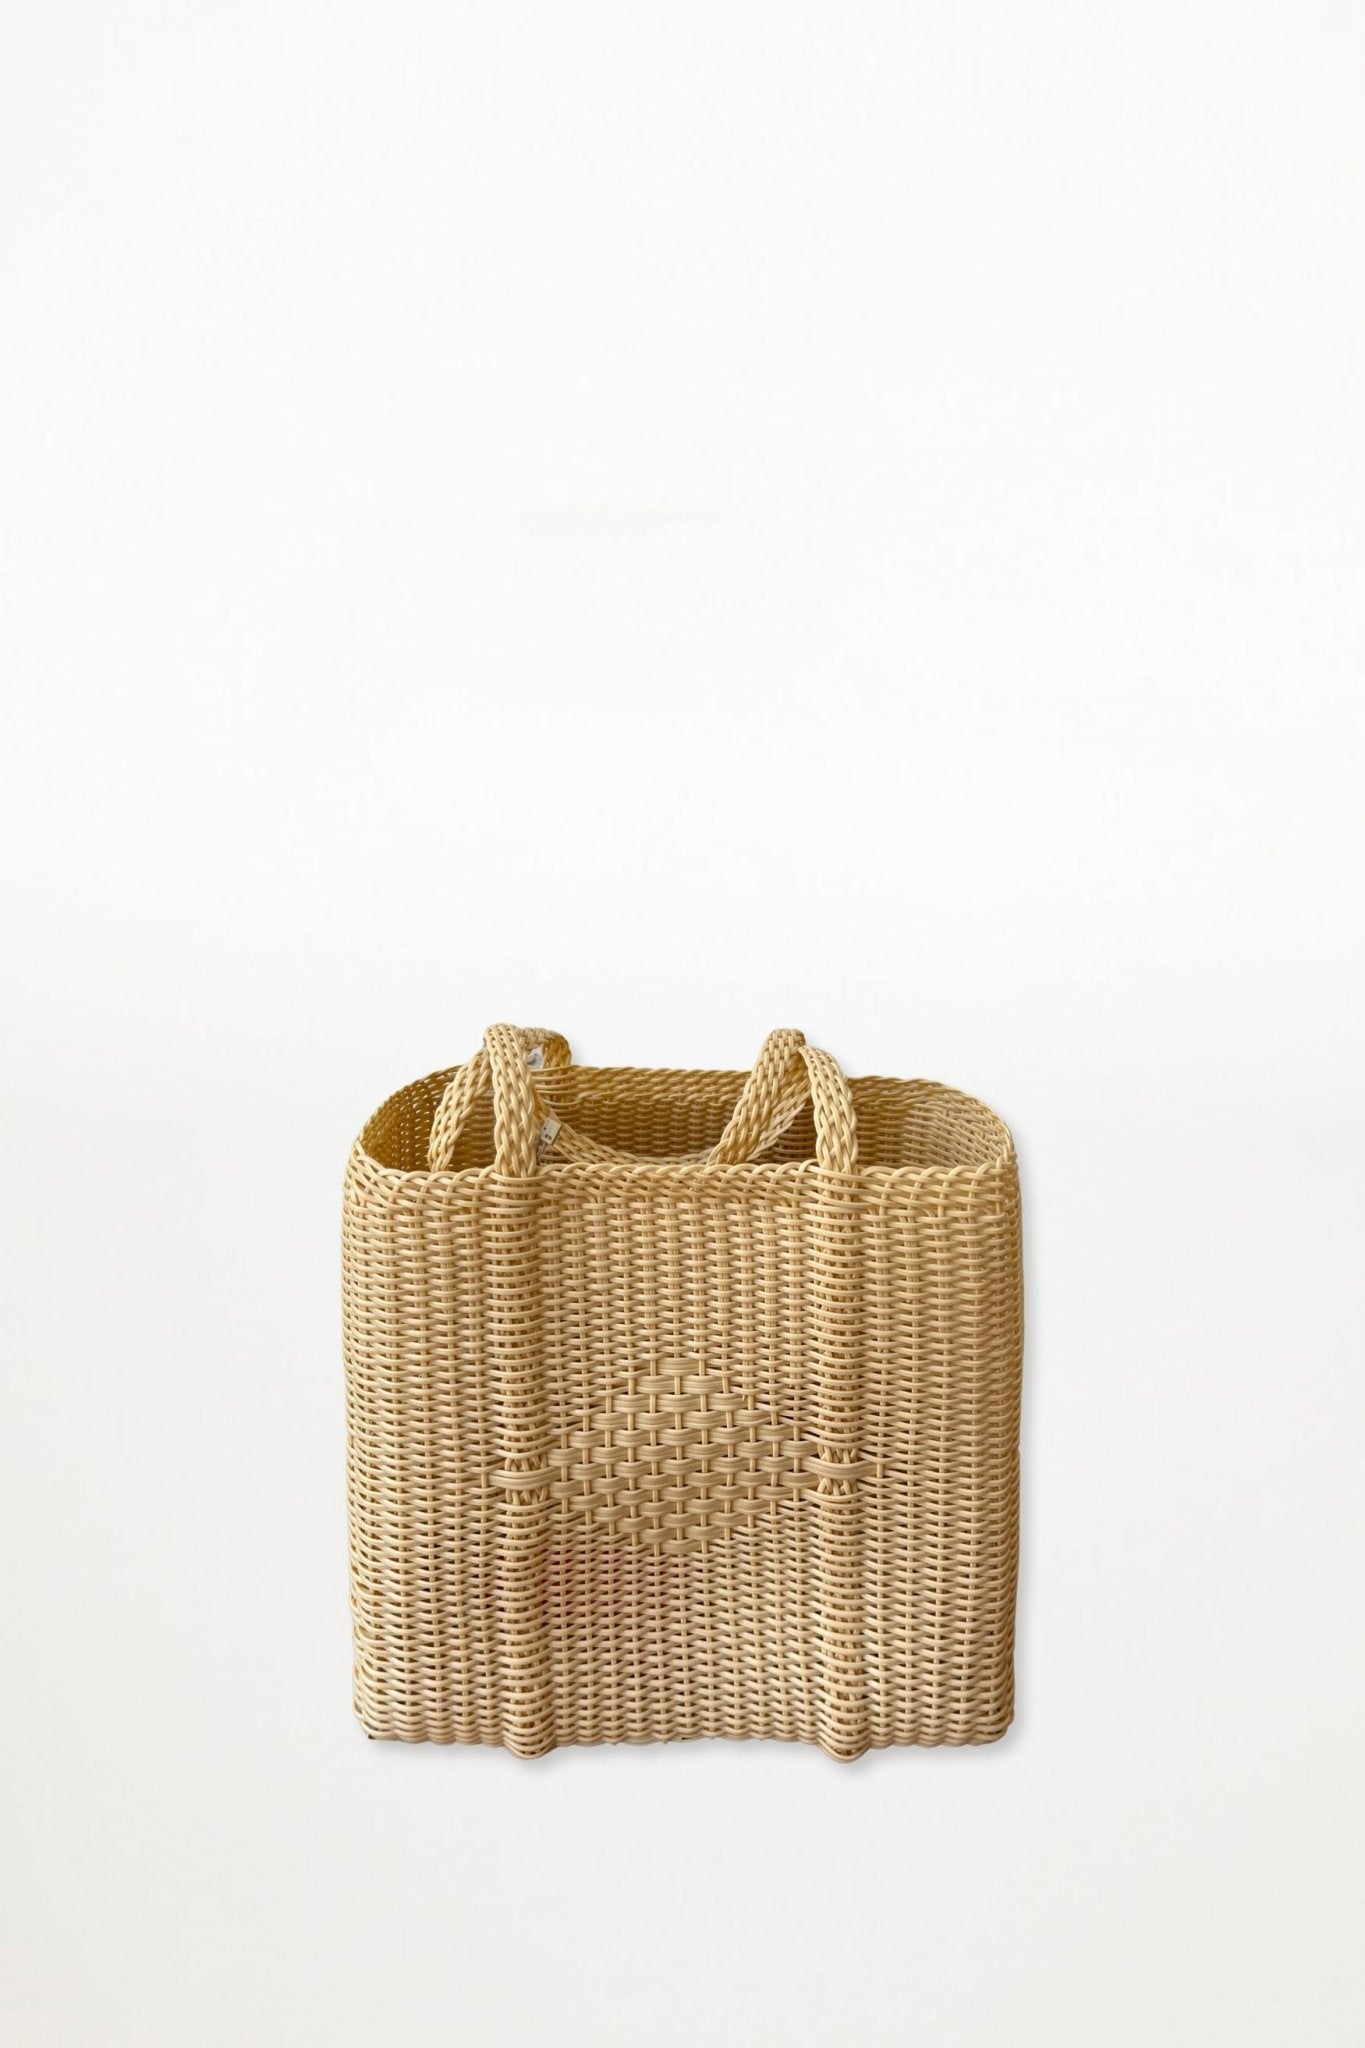 ixöq - Recycled Plastic Cesta Basket Tote Medium - Sand - Ensemble Studios